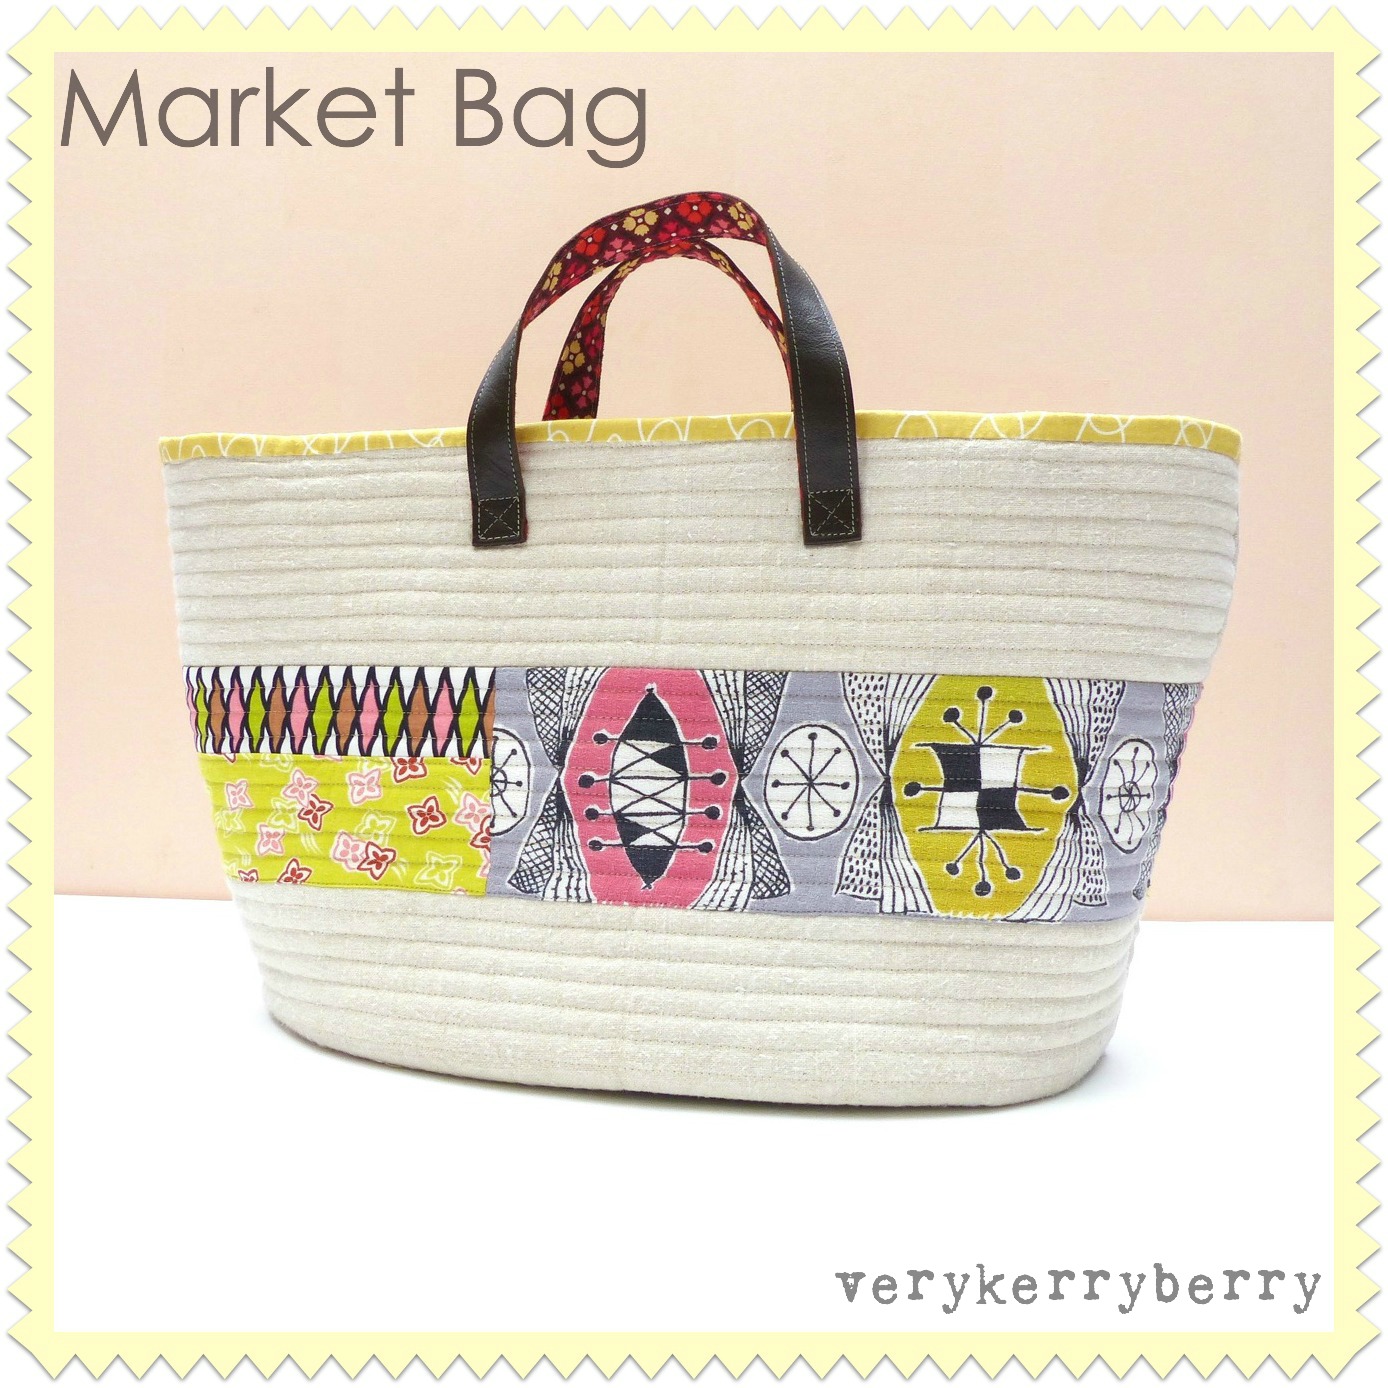 verykerryberry: Market Machine Bag